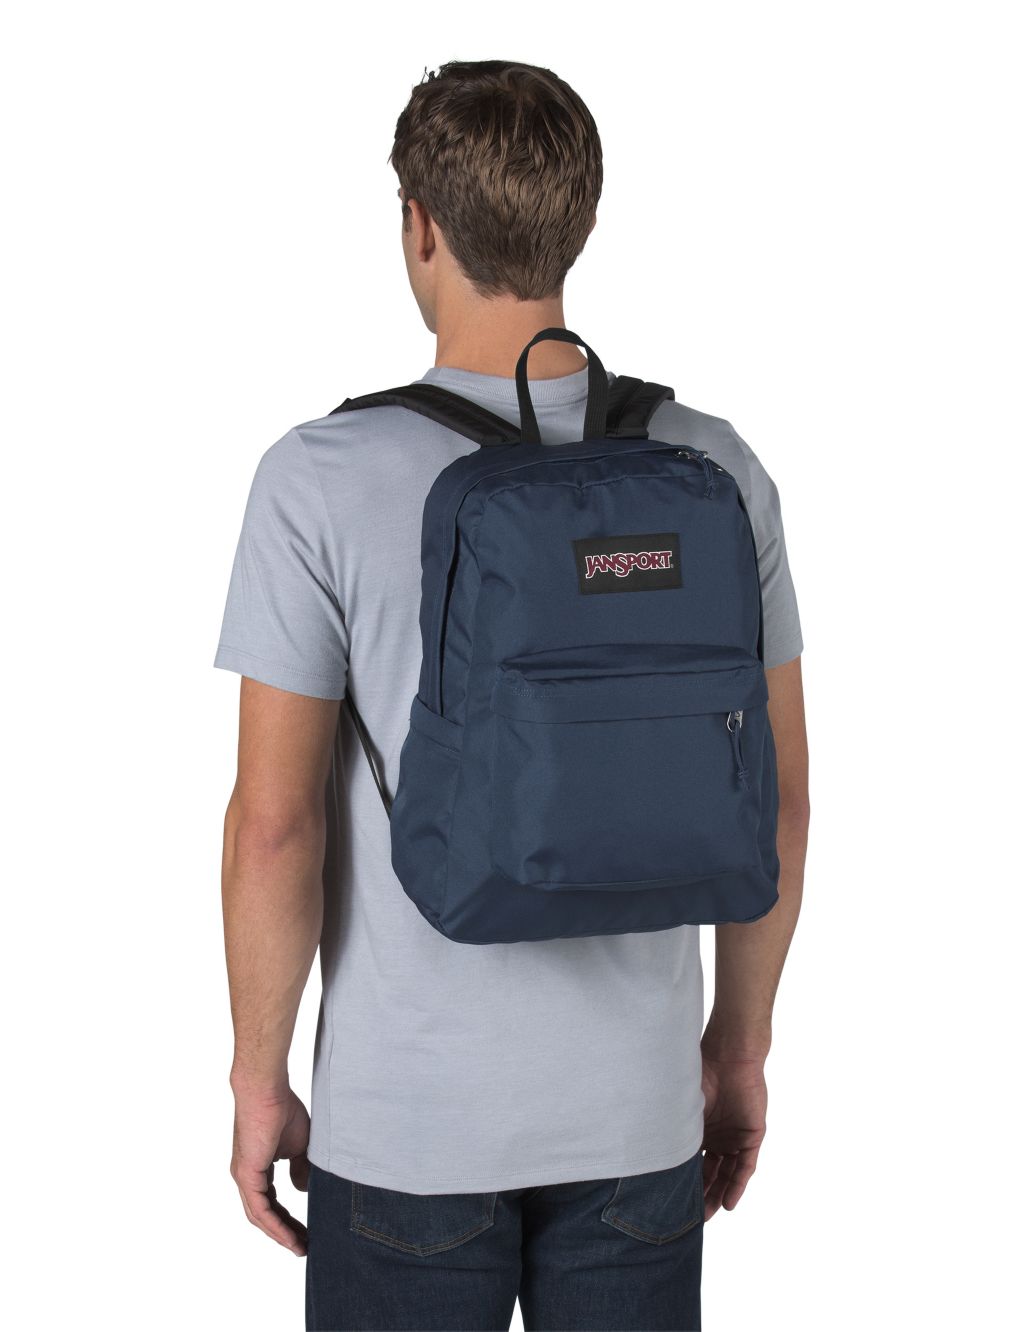 SuperBreak Plus Backpack image 2